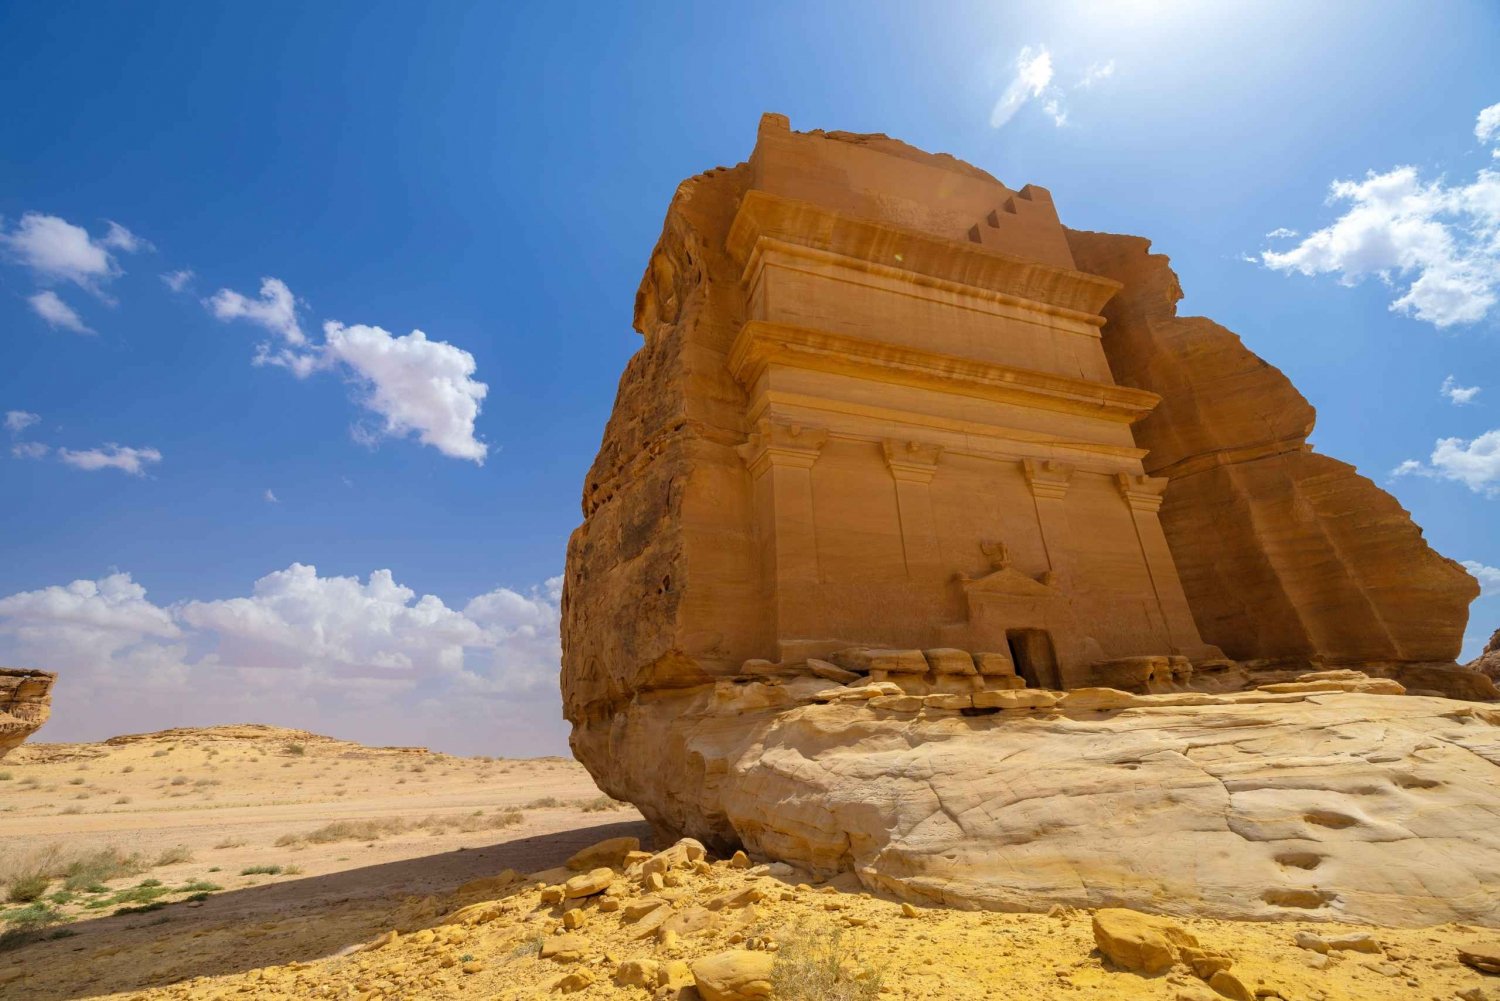 Saudi Arabia: Hegra Heritage (AlUla) Expedition